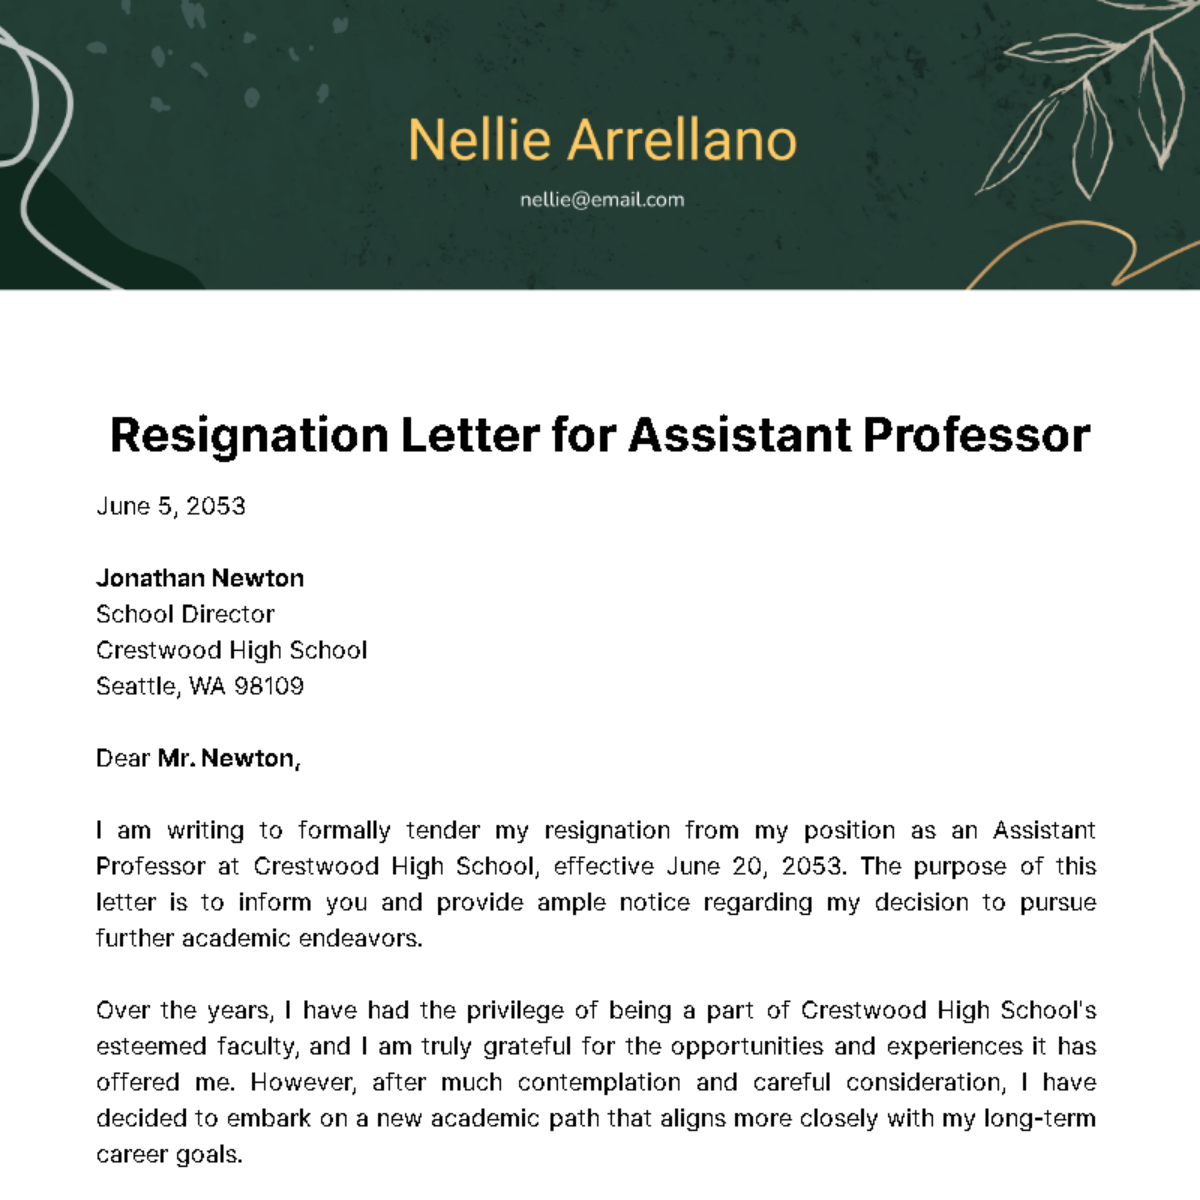 Resignation Letter for Assistant Professor Template